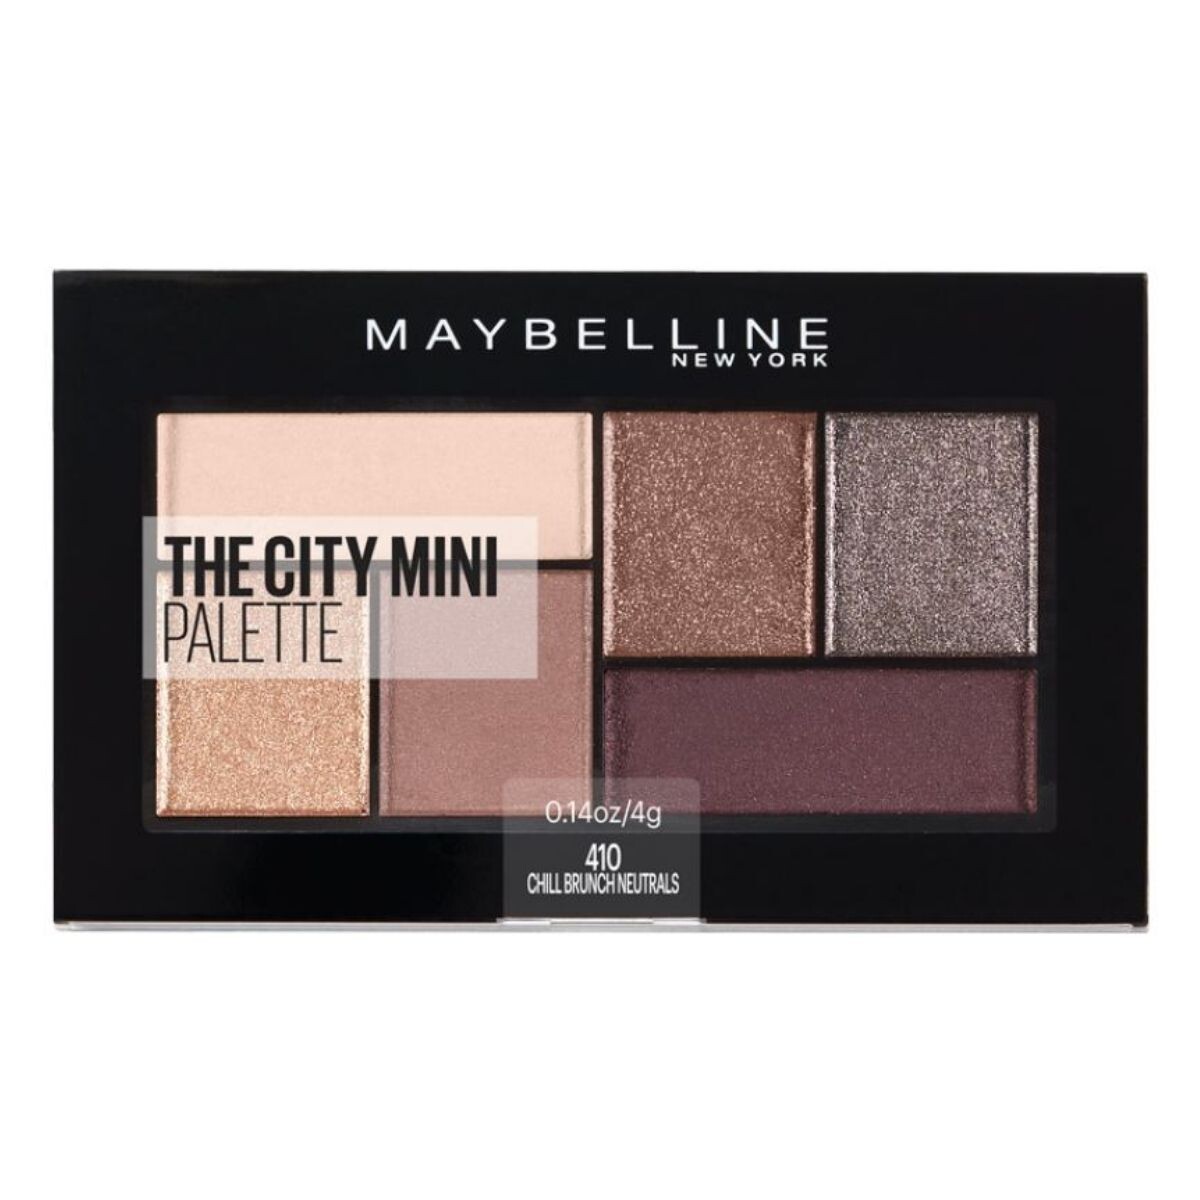 Sombra Maybelline The Citiy Mini Palette Chill Brunch Neutrals #410 